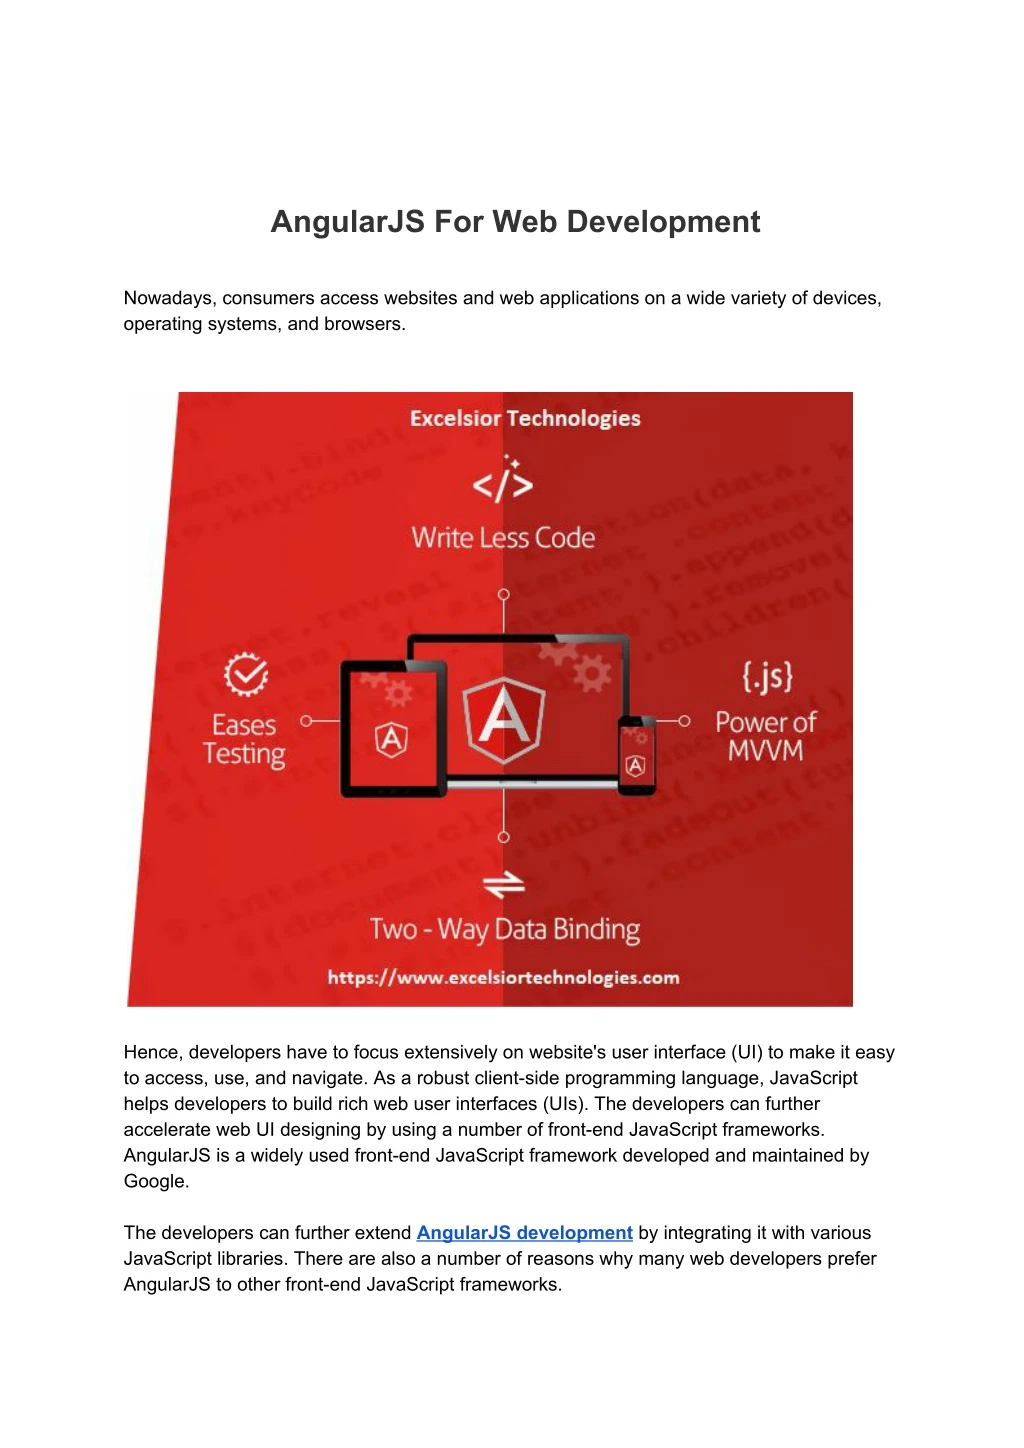 angularjs for web development